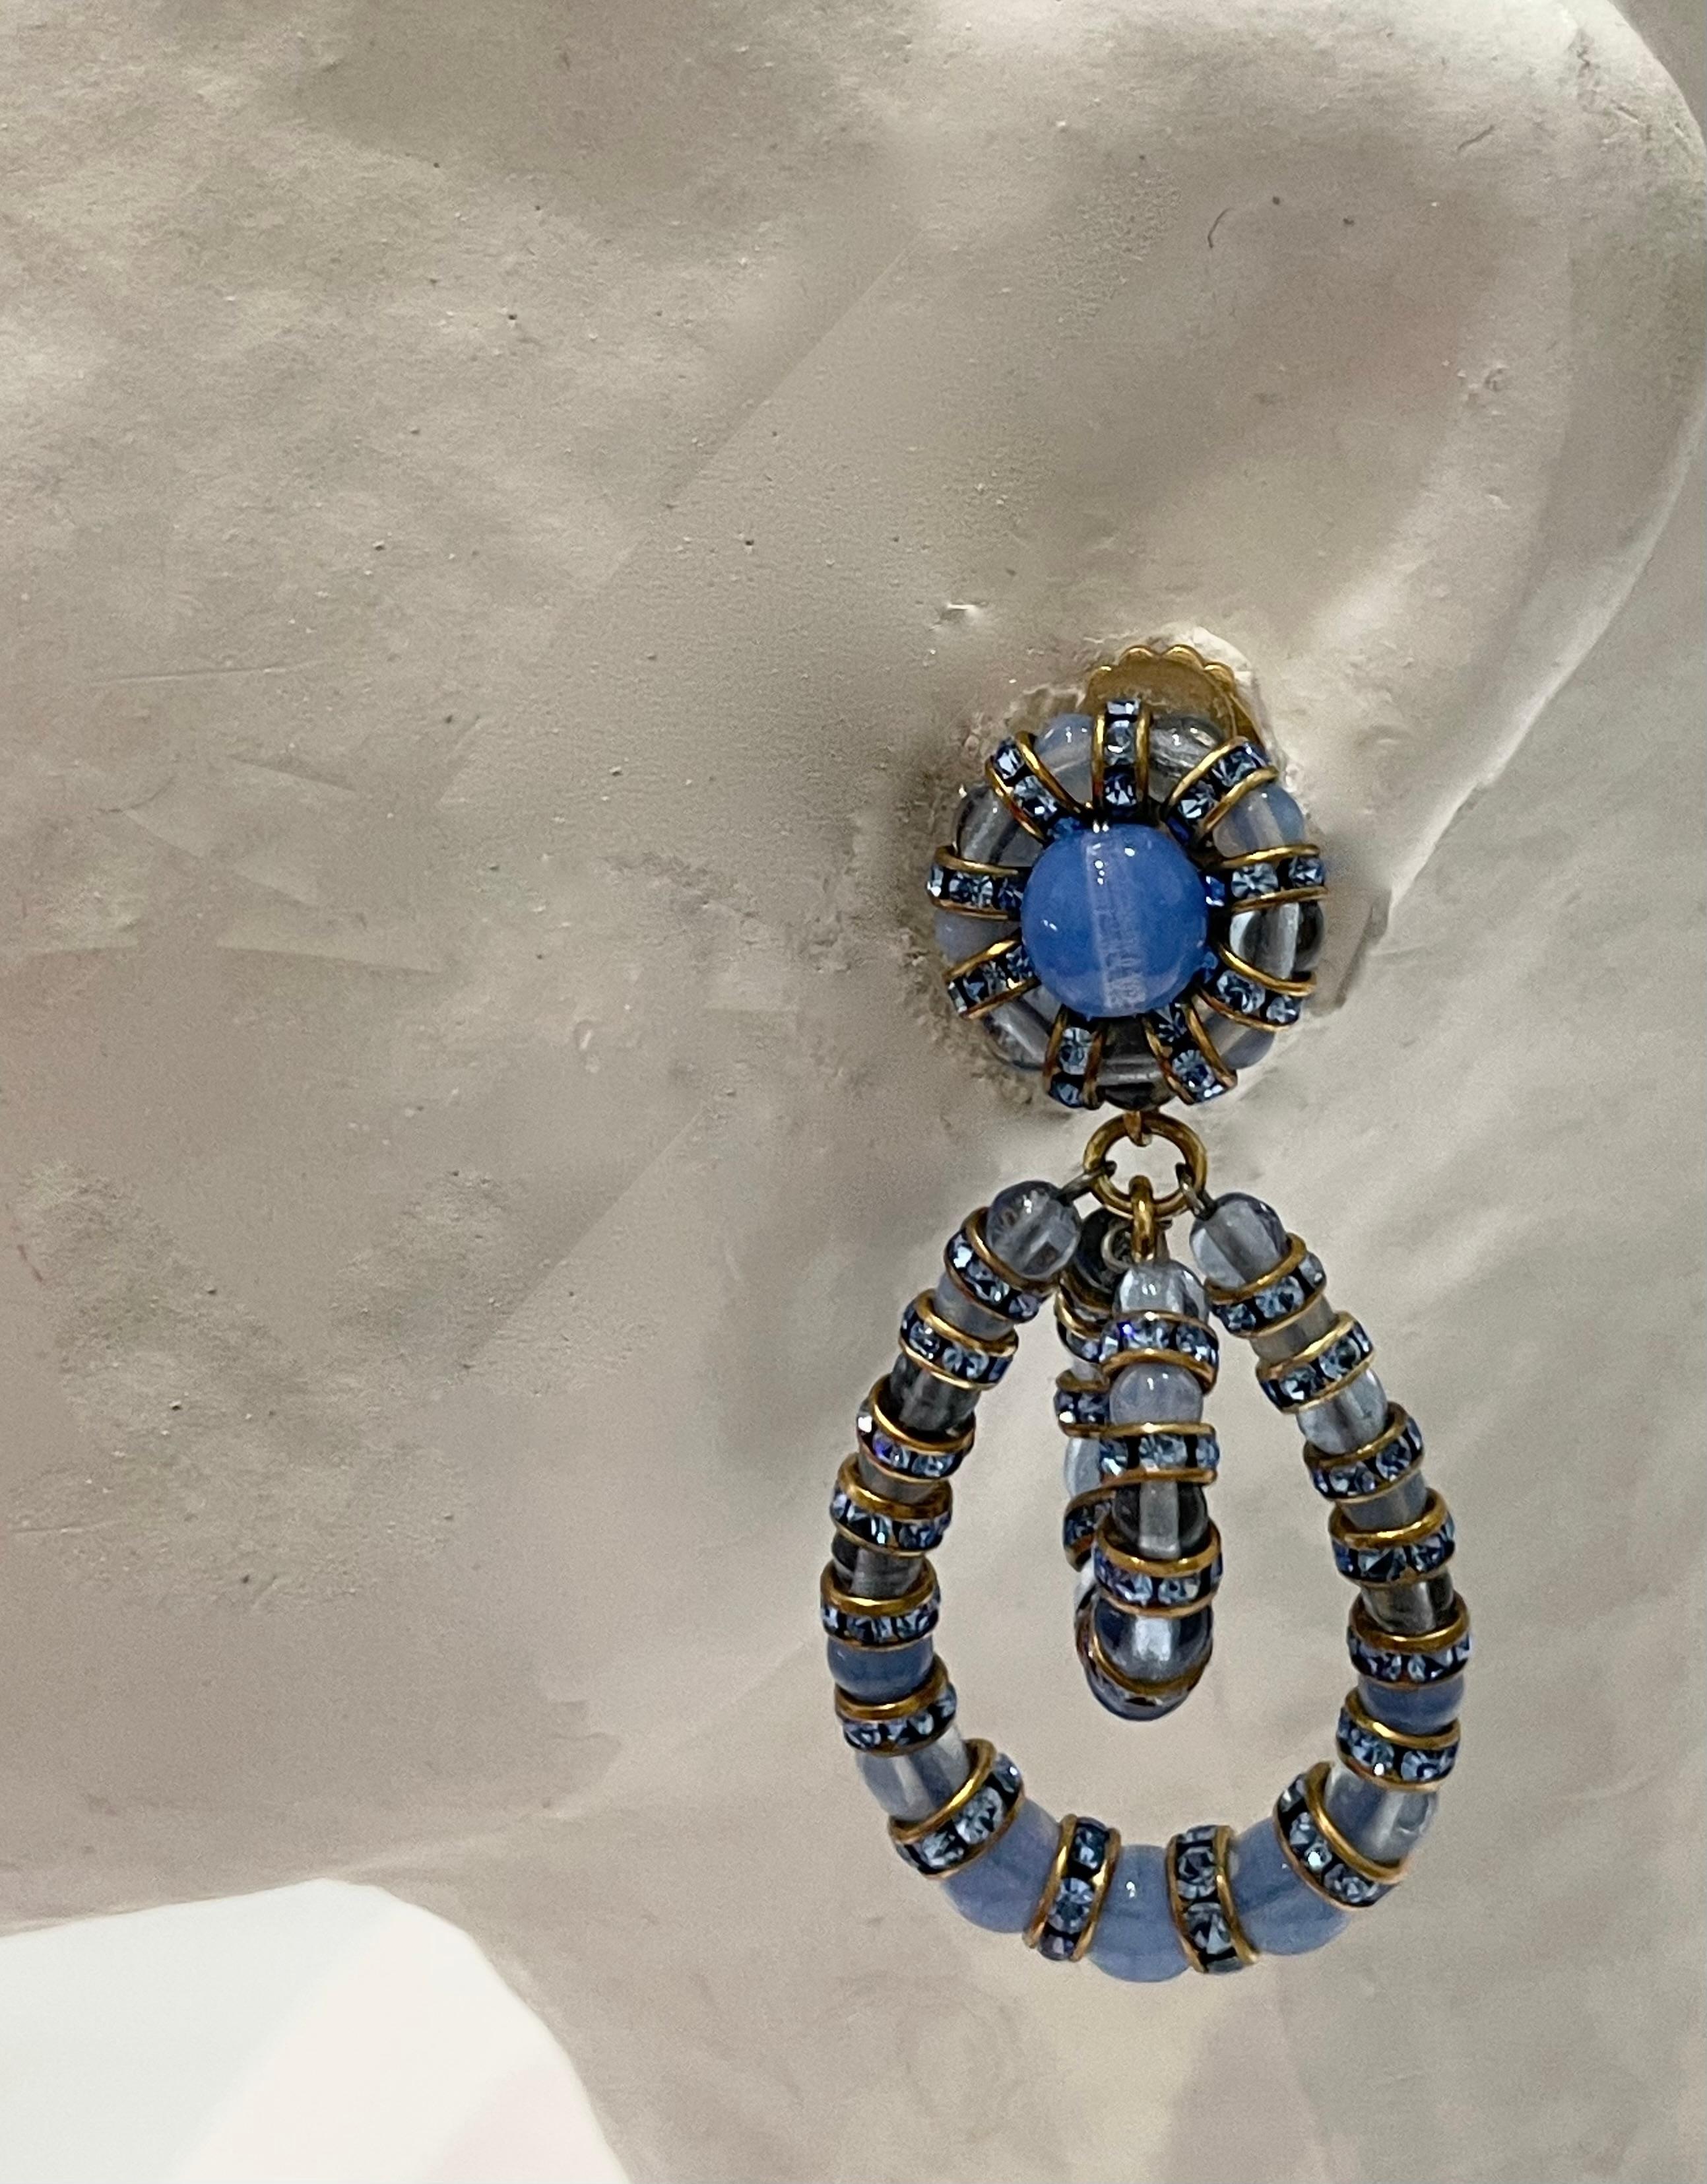 Modern Françoise Montague Periwinkle Lolita Clip Earrings  For Sale